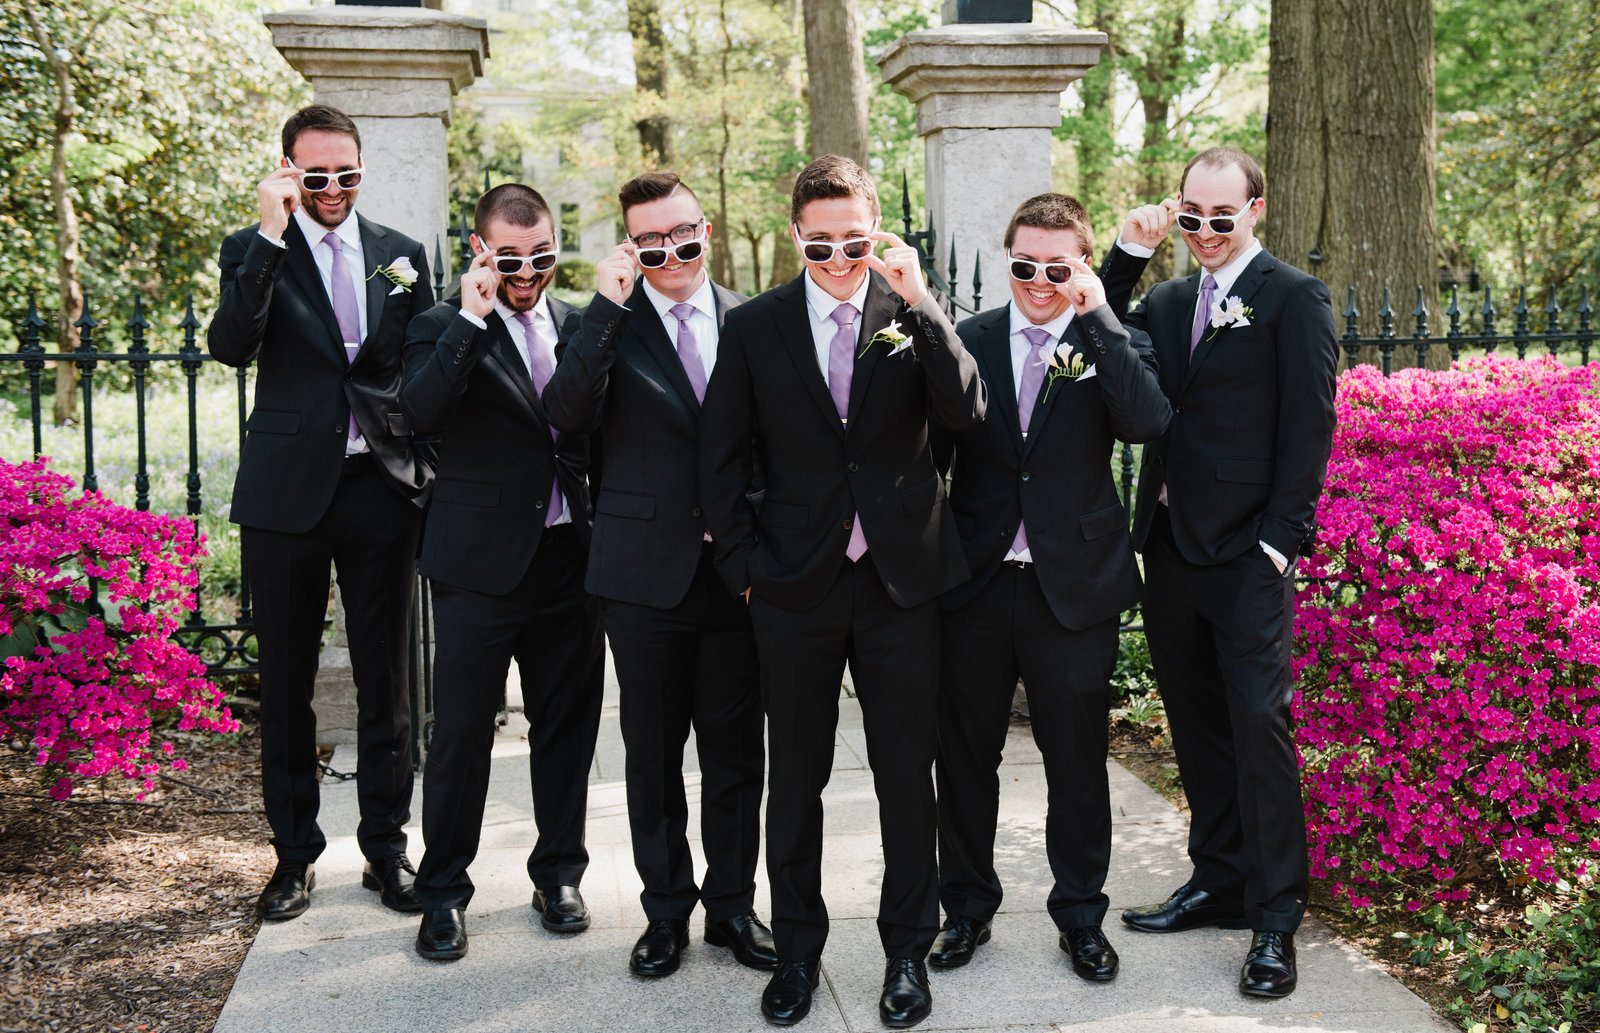 groomsmen and groom wedding photos